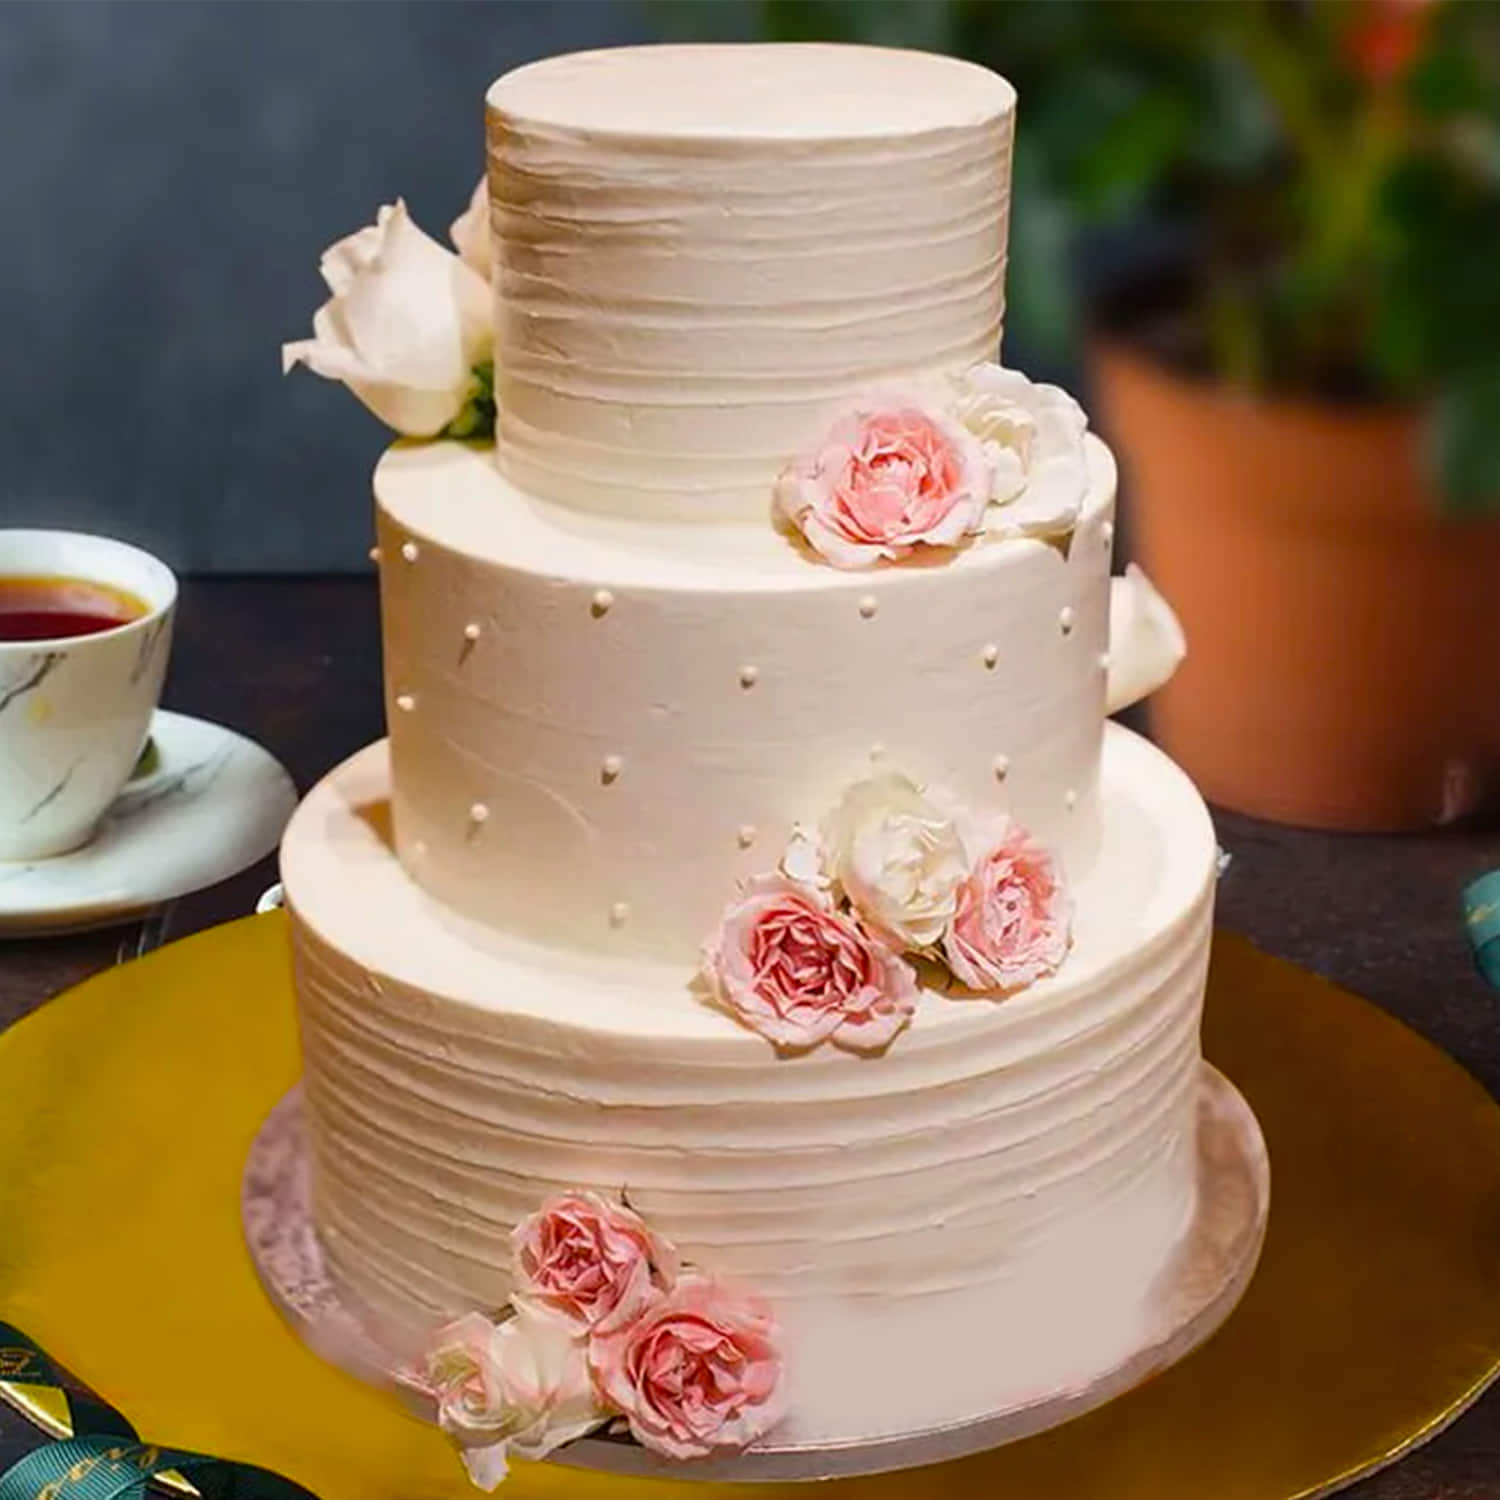 Buy Online Naked Wedding Cake - Budget Friendly | Harry Batten